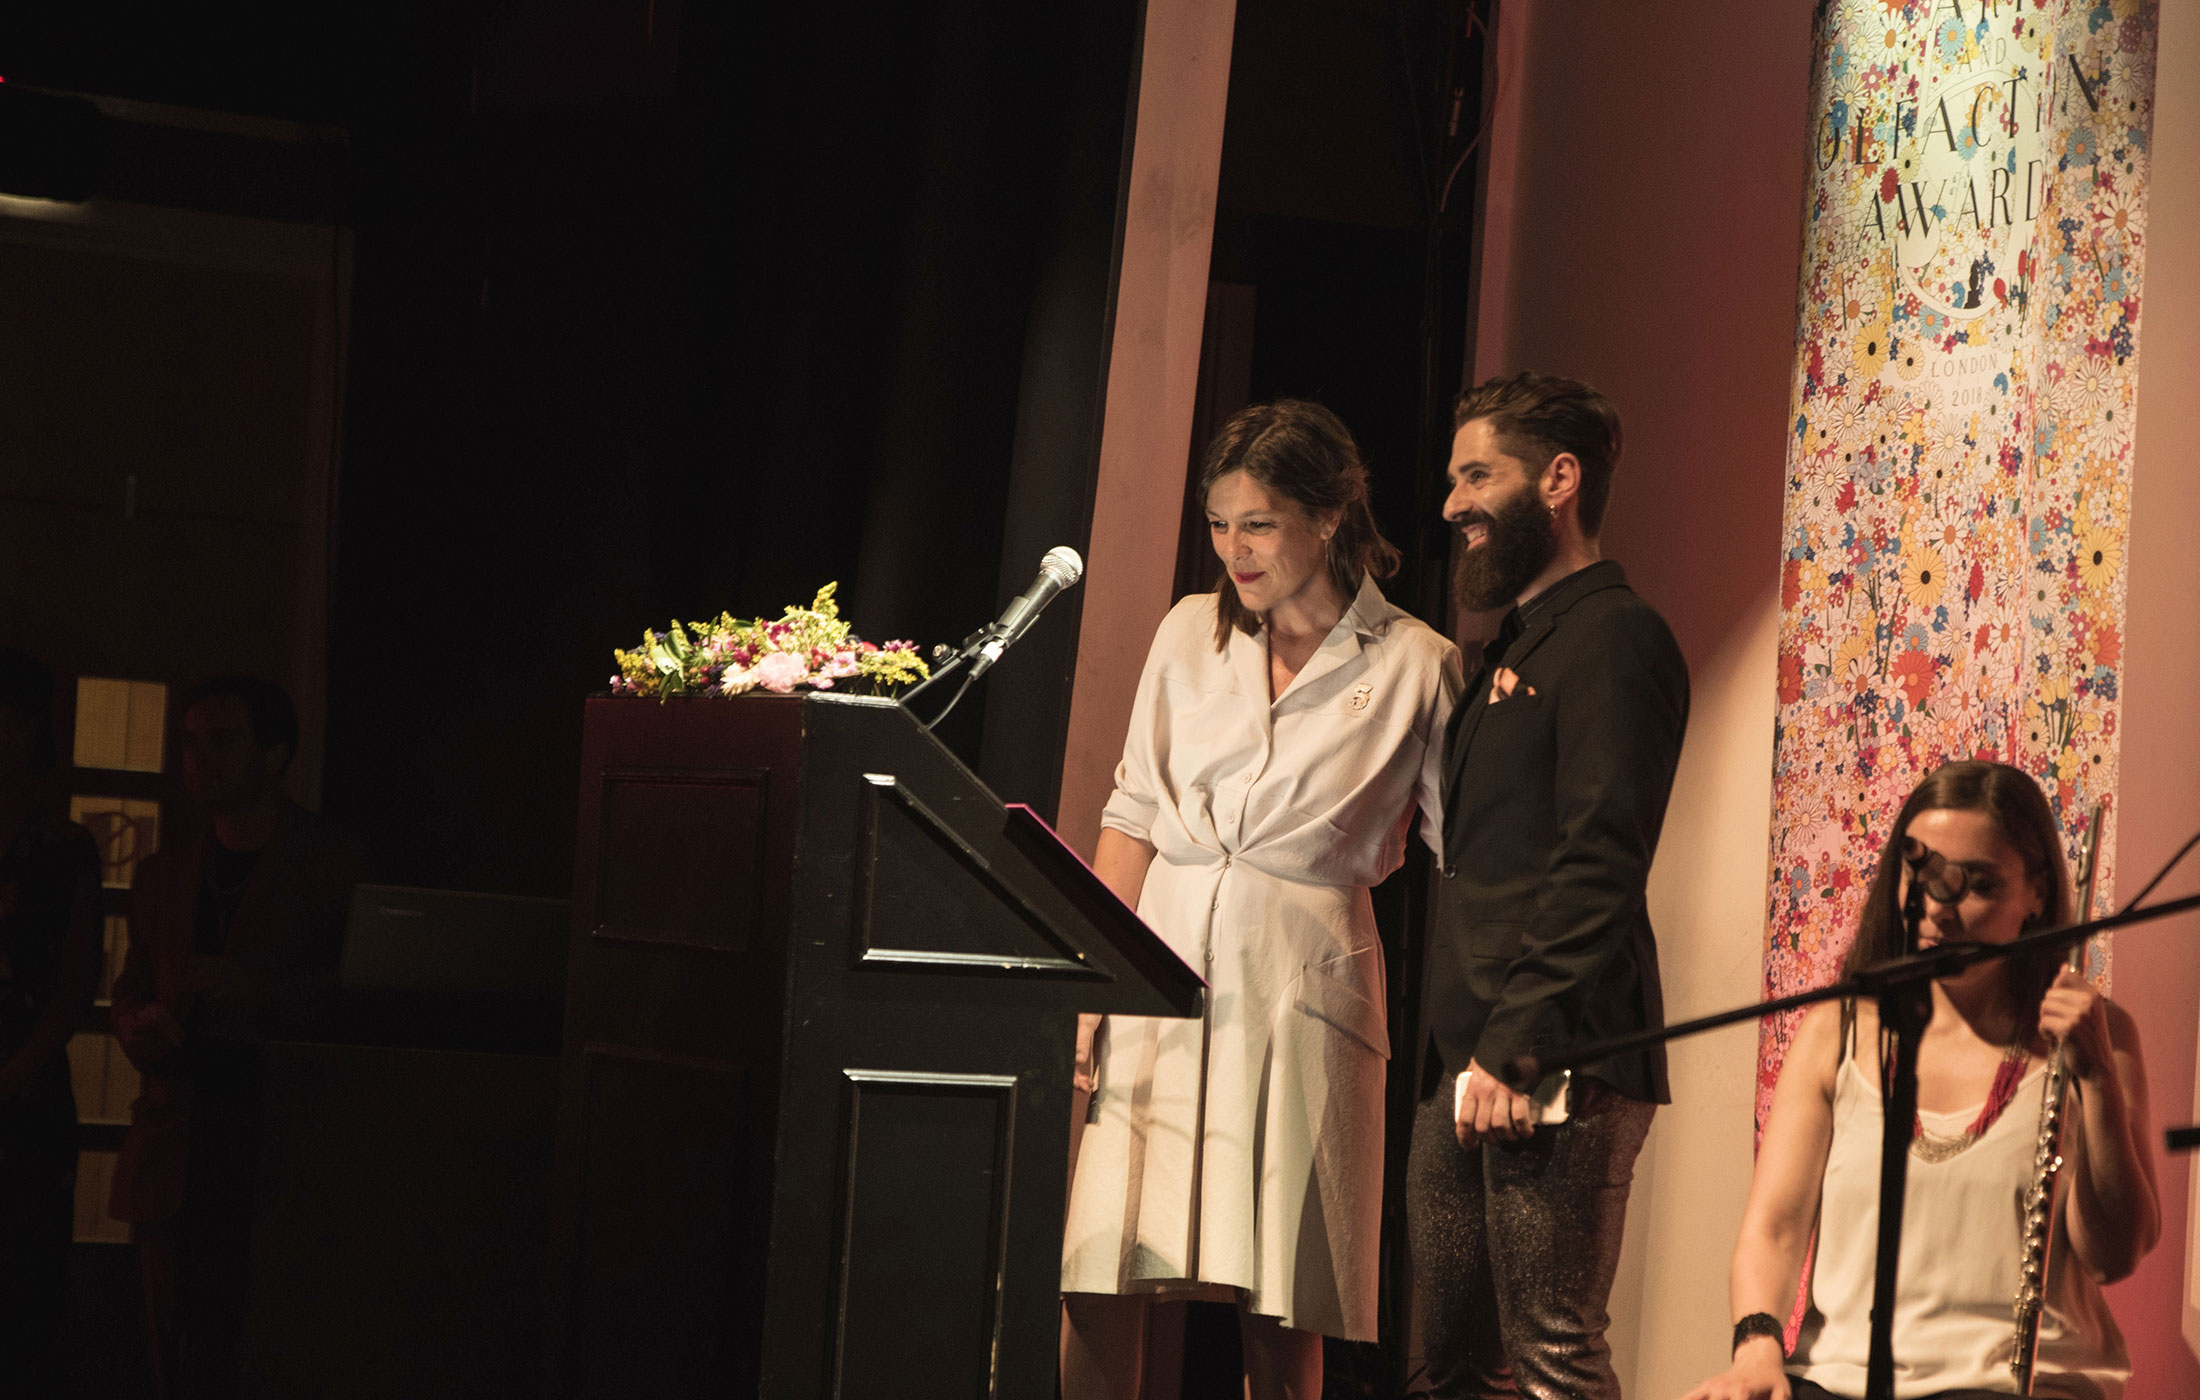 Saskia Wilson-Brown, Miguel Matos at The Art and Olfaction Awards, Photo by Marina Chichi